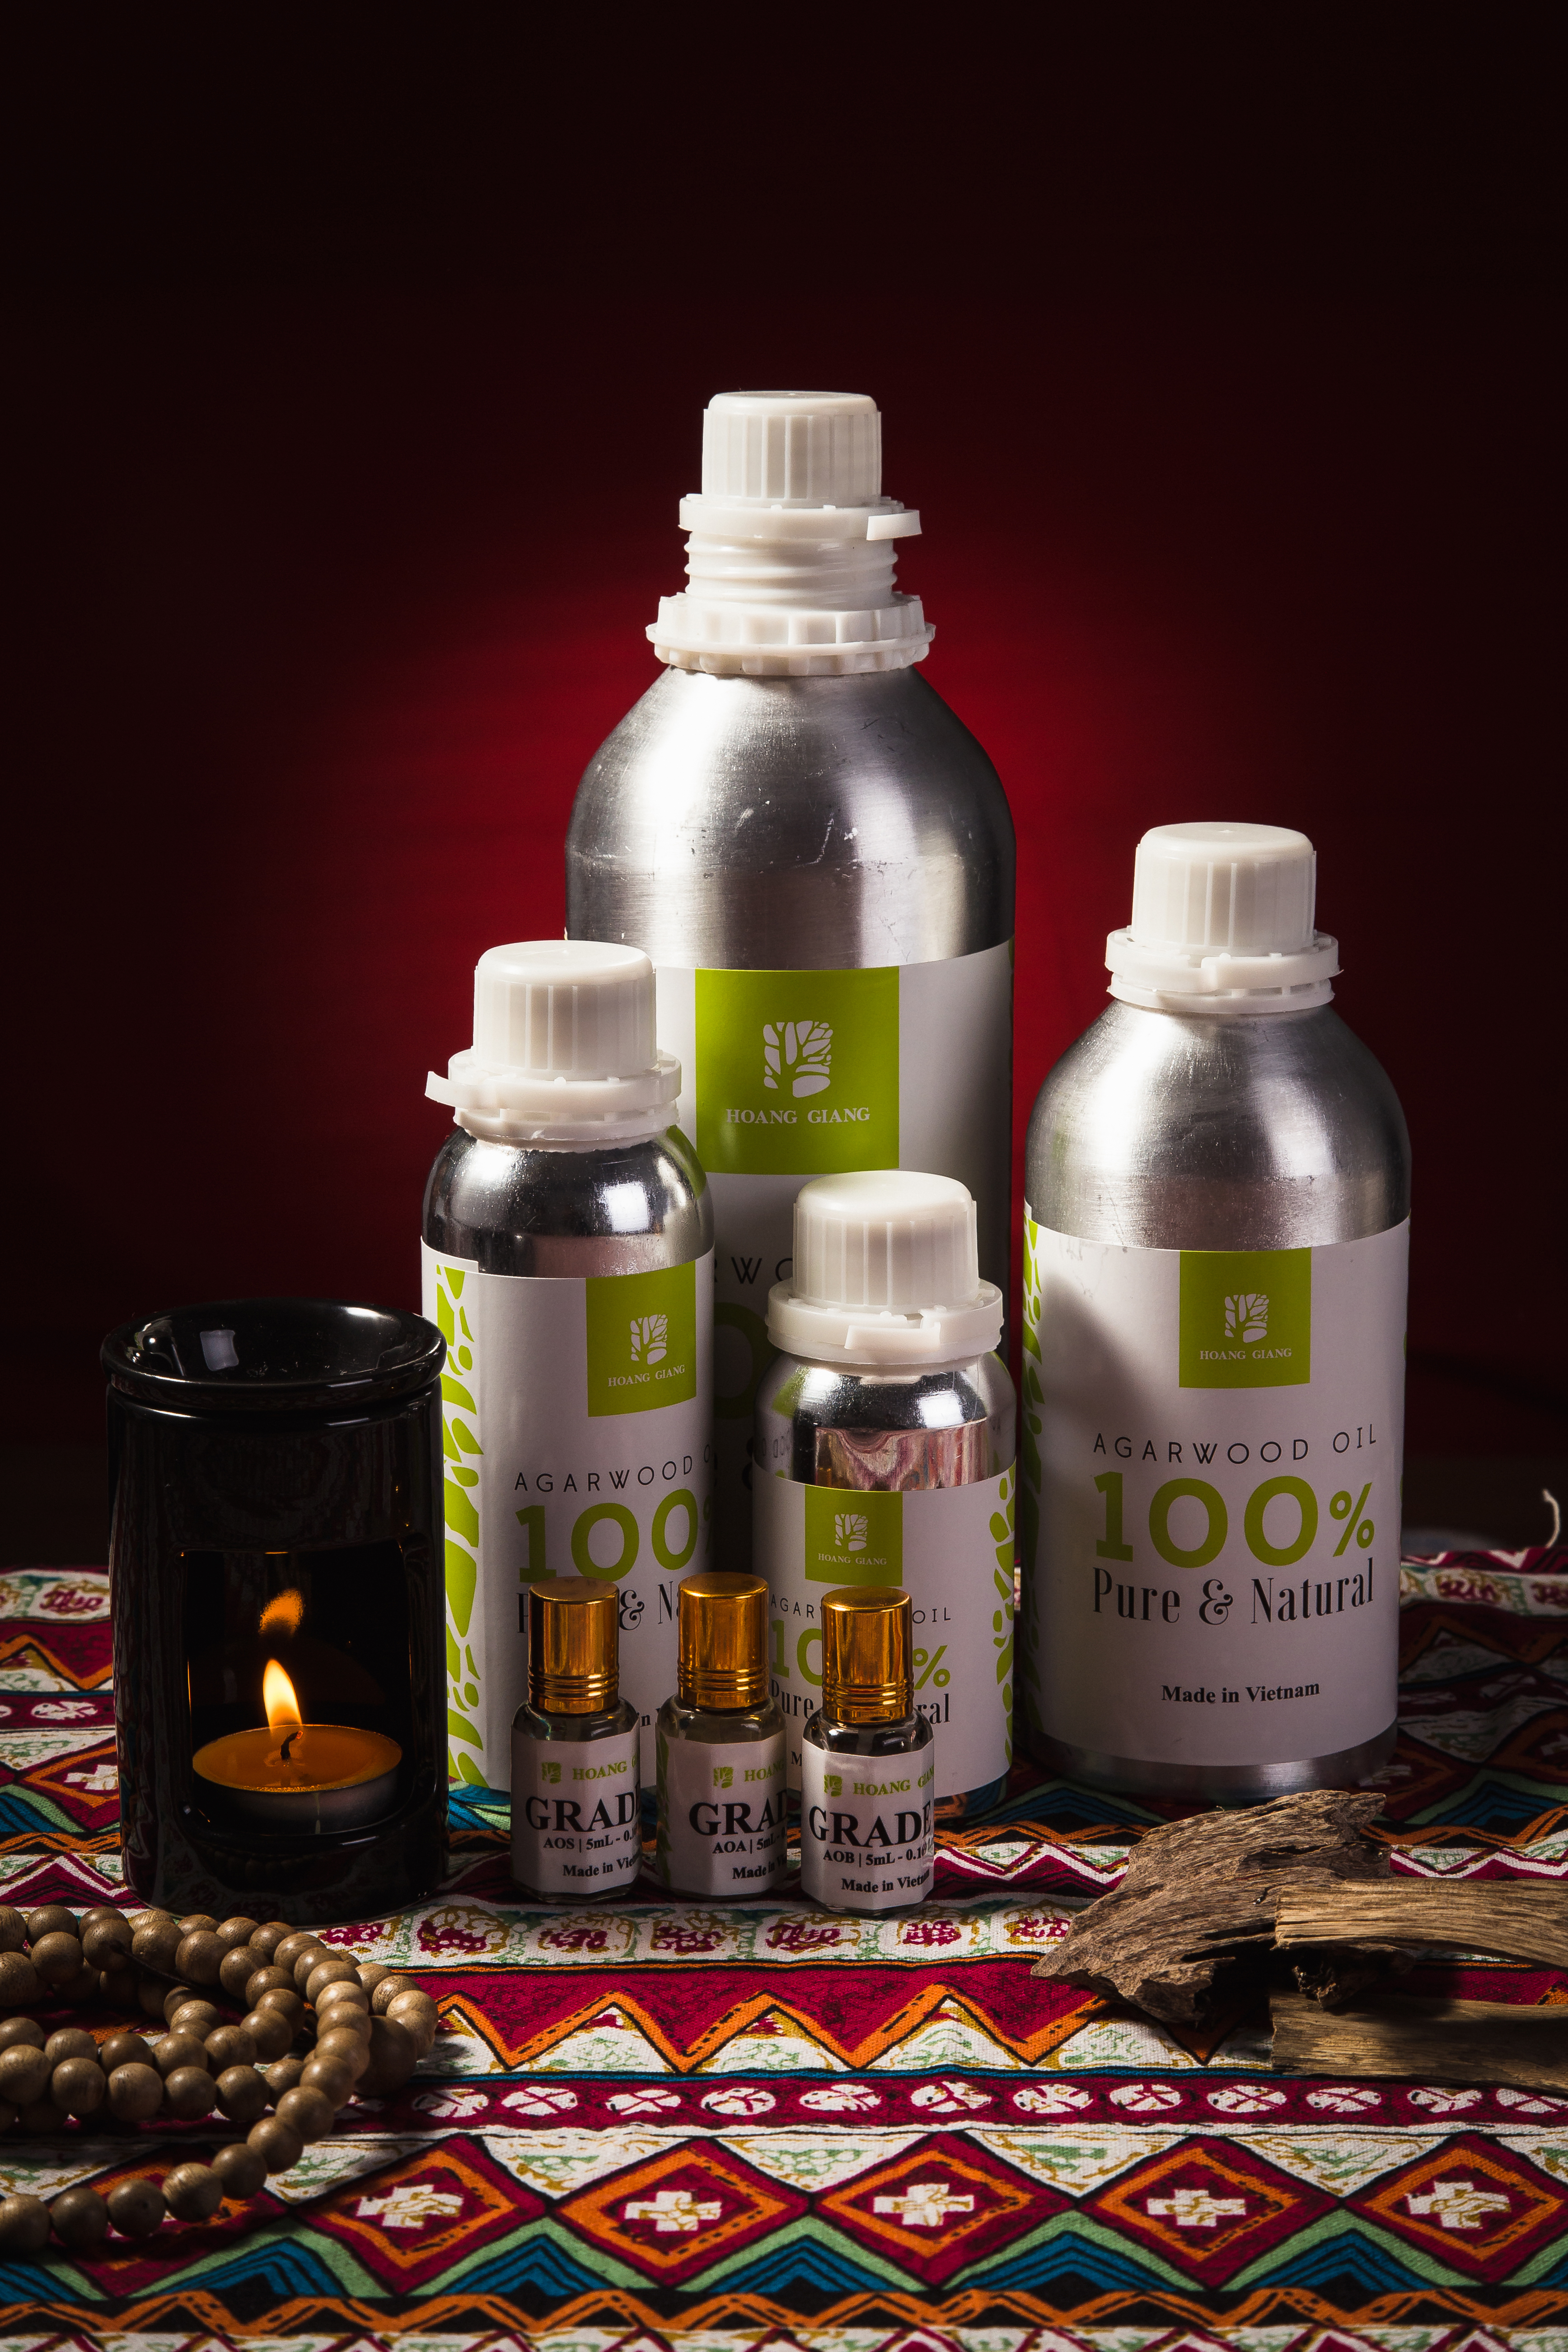 Buy 100% Natural Agarwood Essential Oil (Oud)